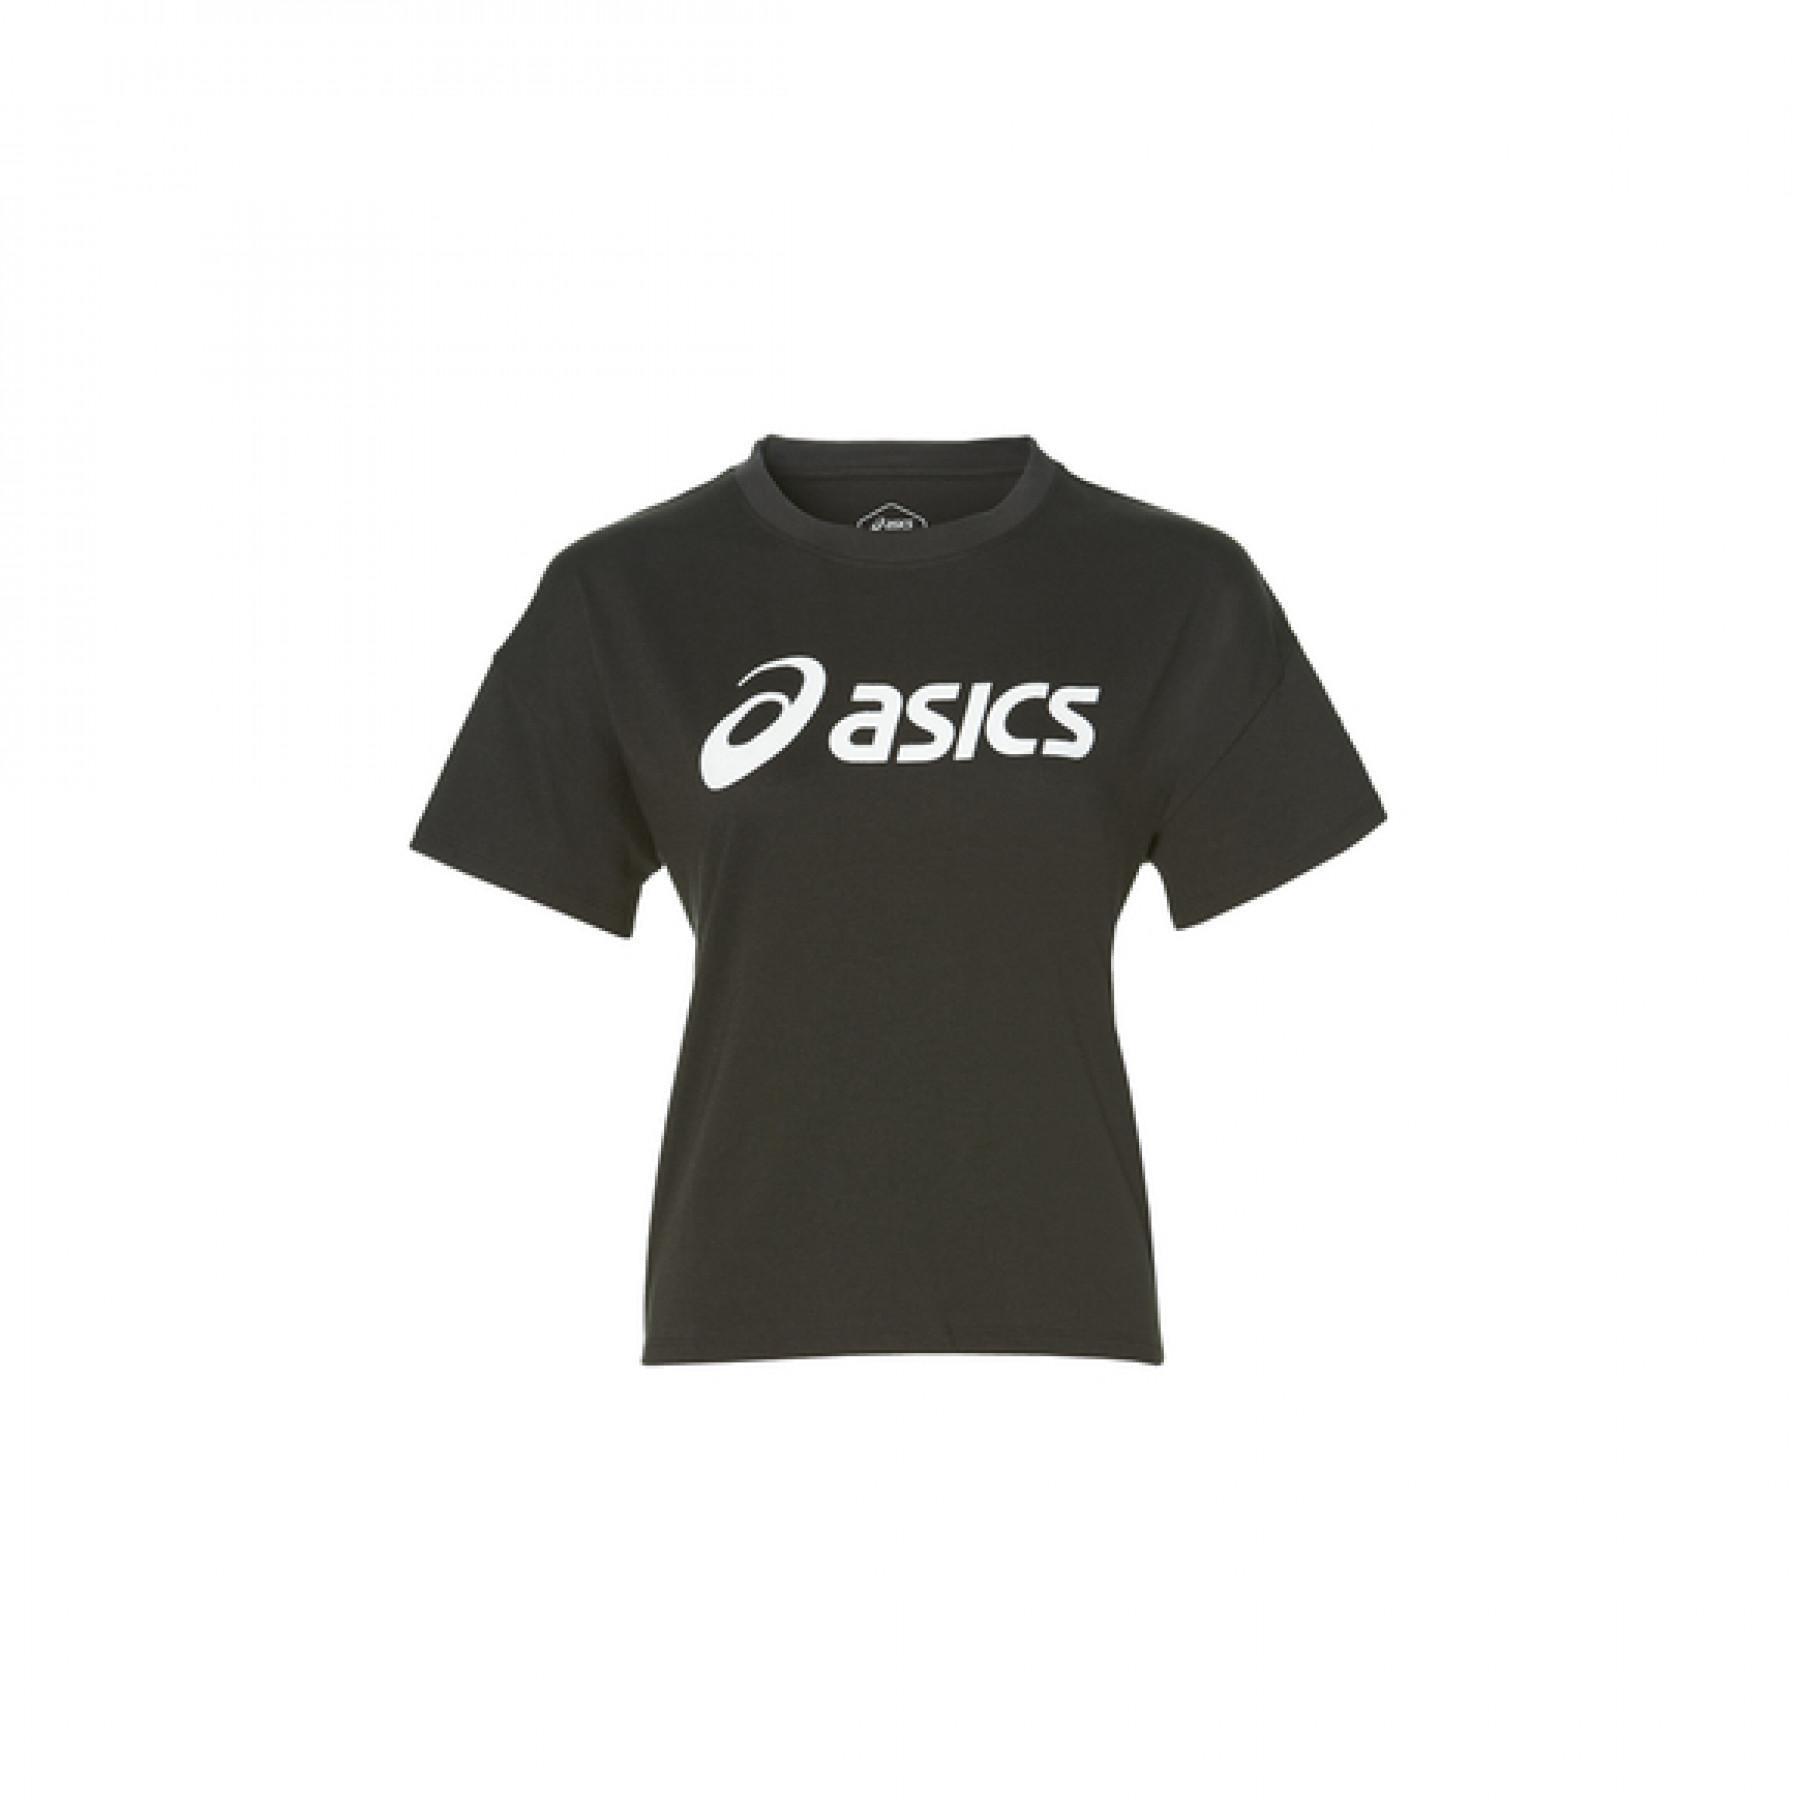 Dames-T-shirt Asics big logo